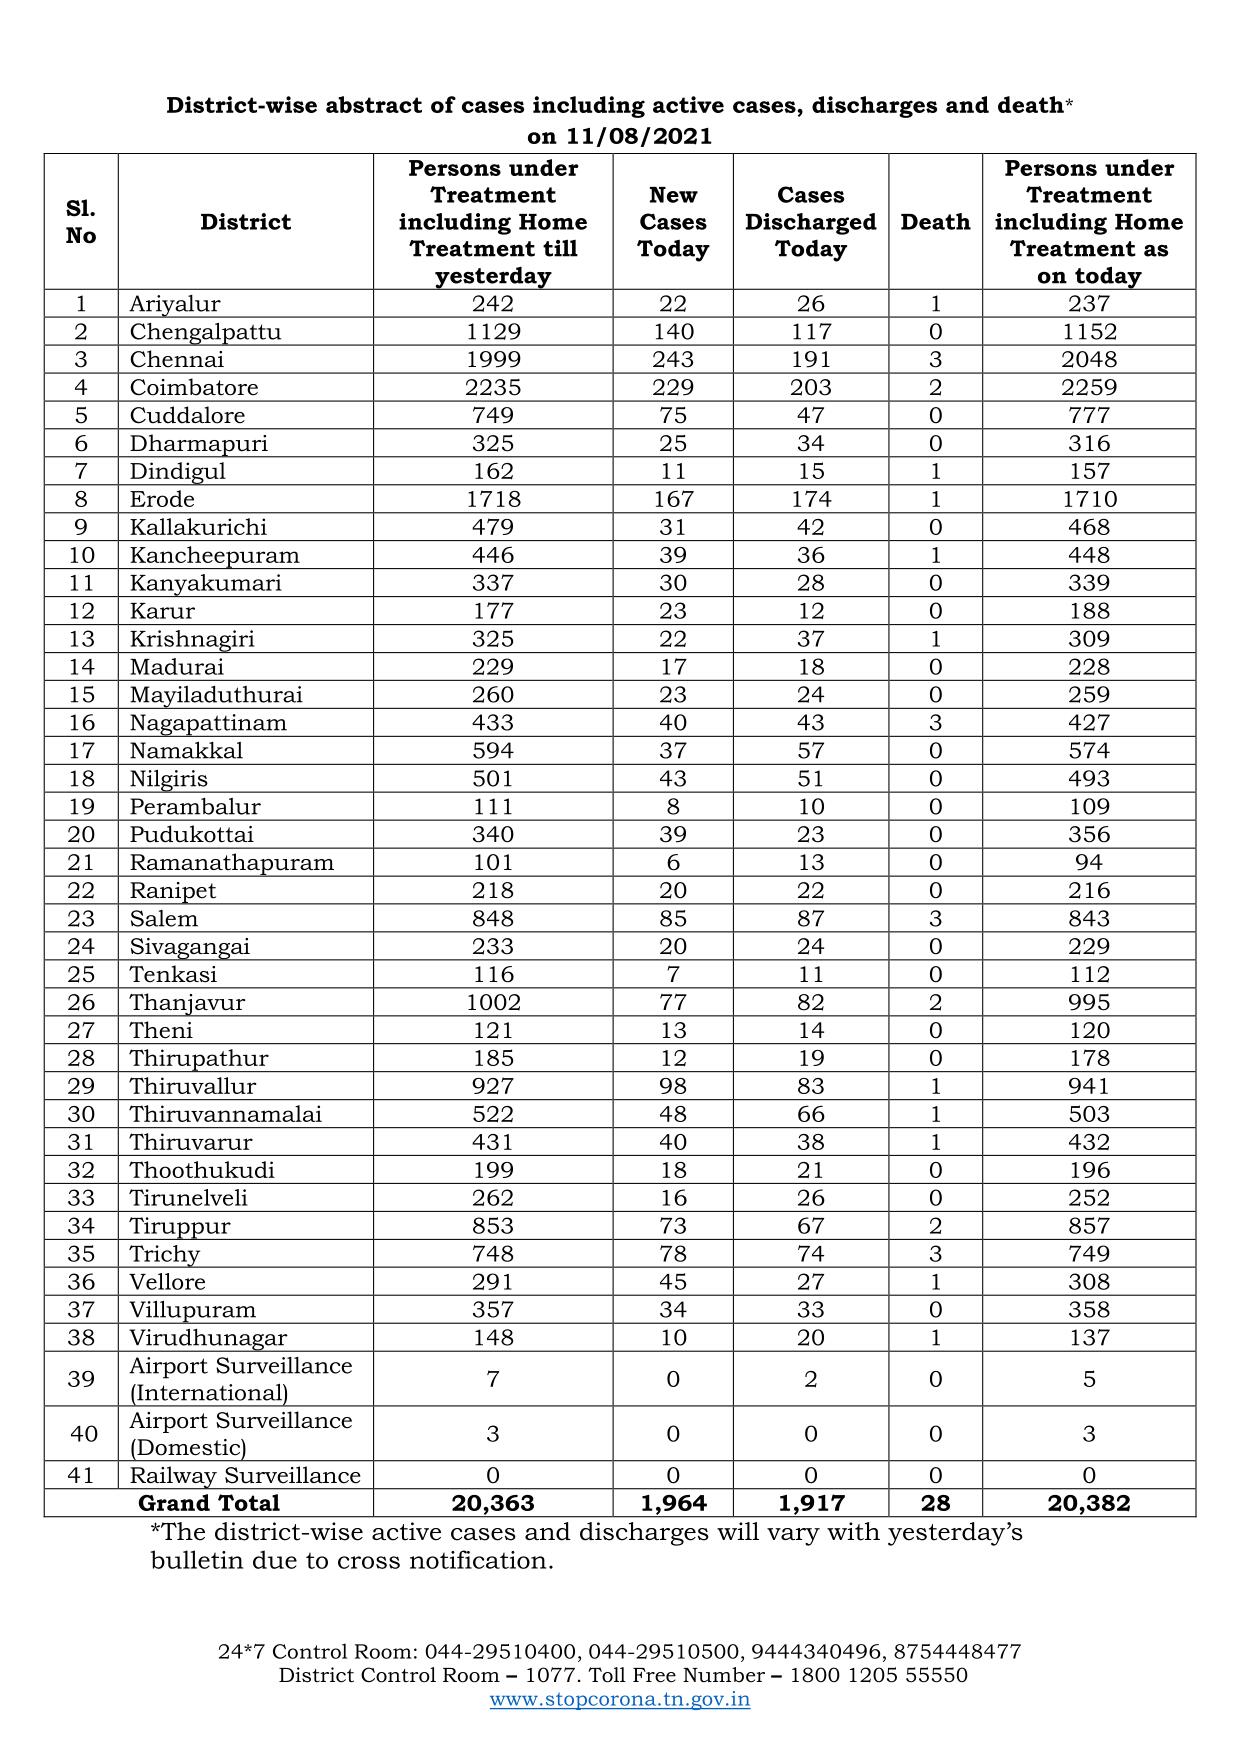 TamilNadu Covid-19 Daily Data Tracker: 77 நாட்களுக்குப் பிறகு கொரோனா பாதிப்பில் முதலிடம் பிடித்தது சென்னை - விவரம் உள்ளே